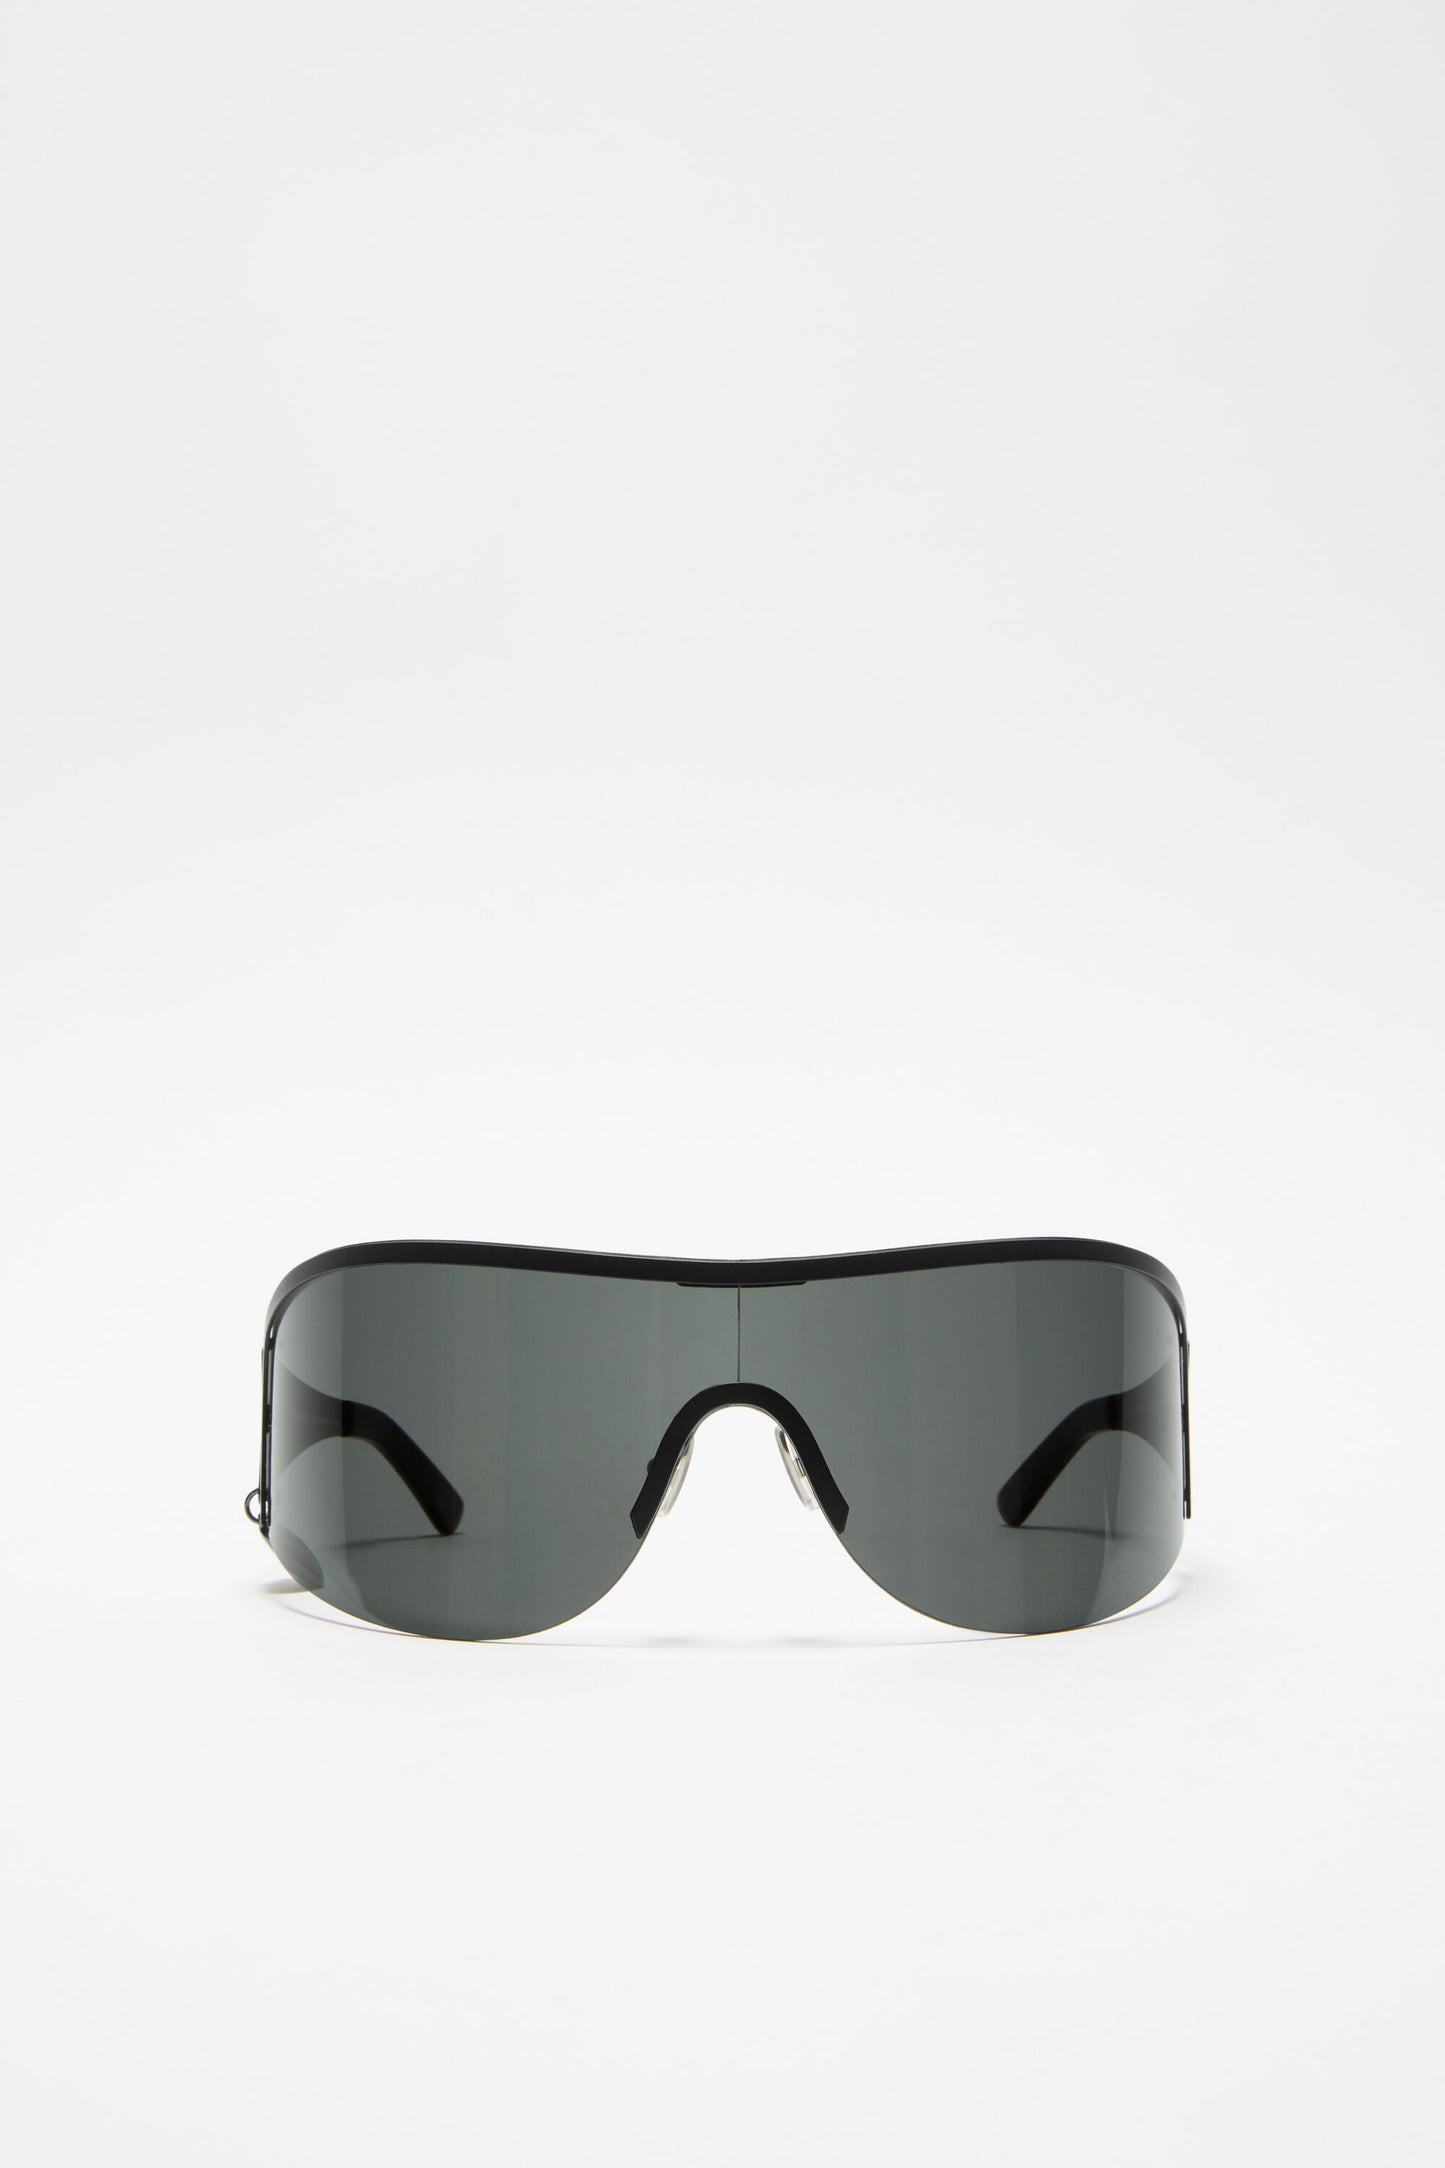 Metal Frame Eyewear, Black, Sunglasses 